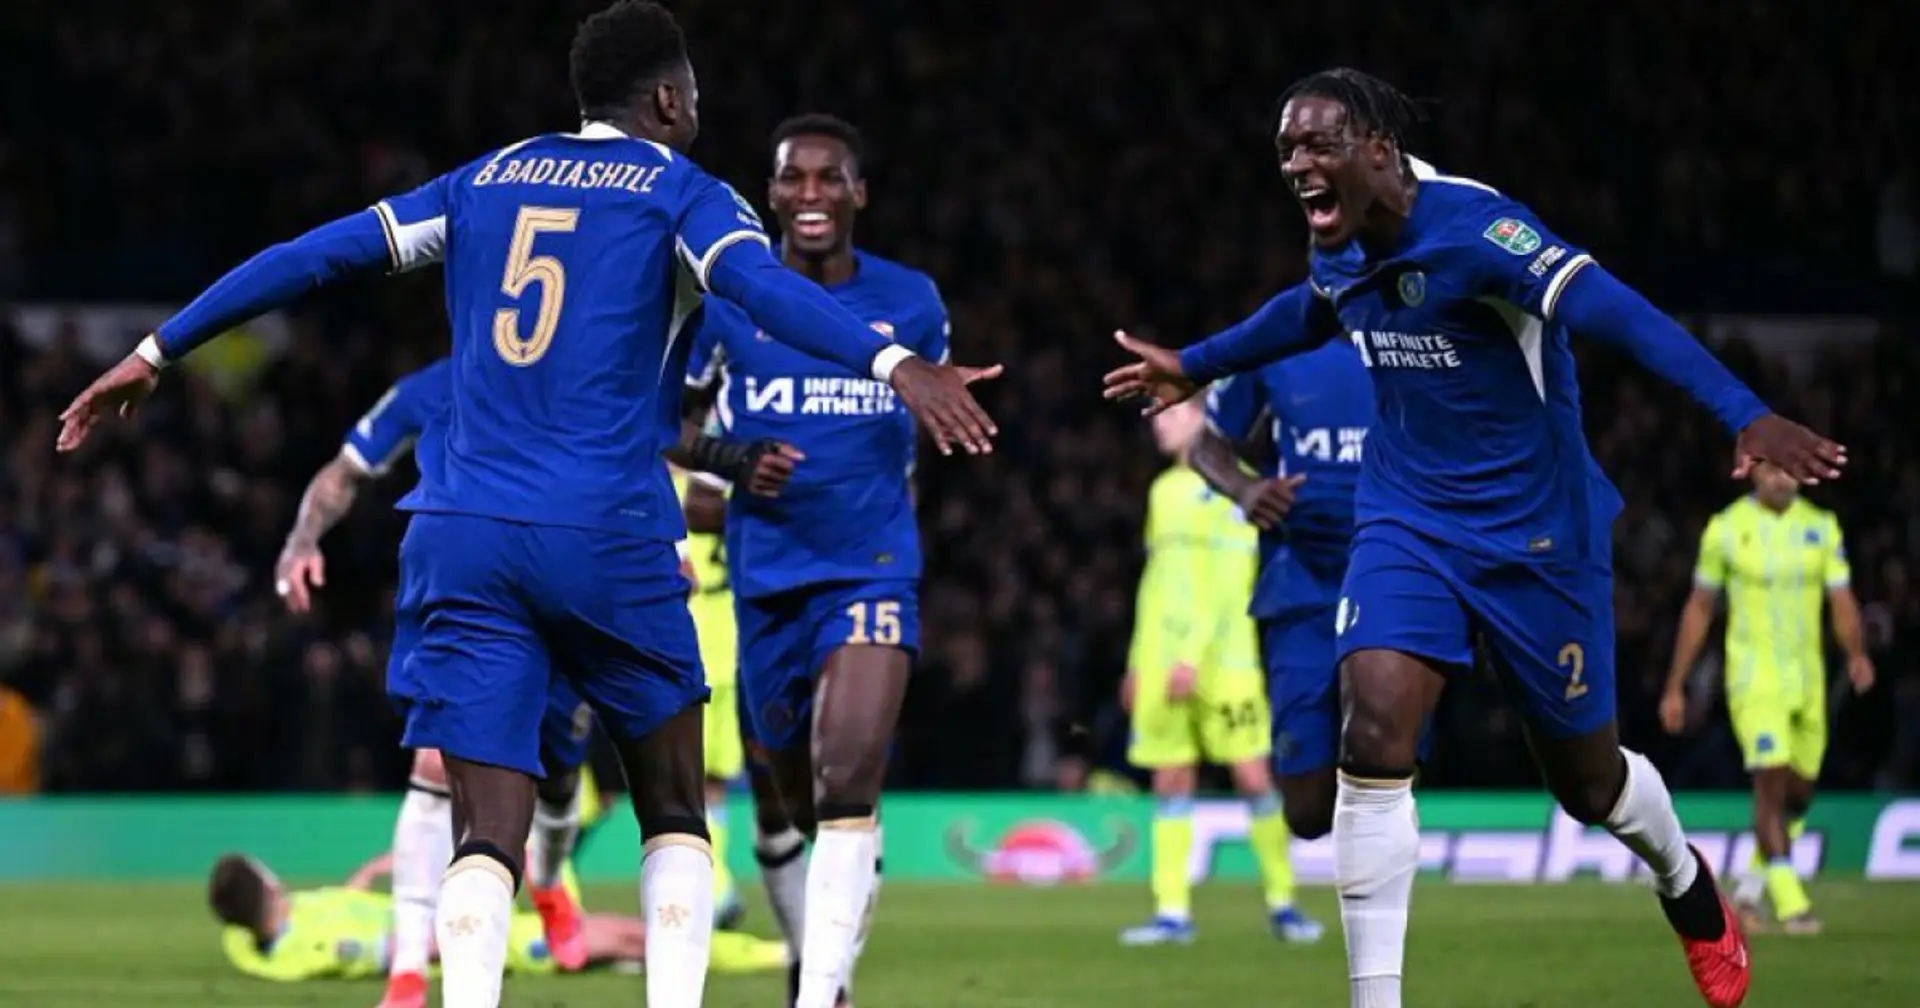 Badiashile - 9, Jackson - 3: Rating Chelsea players in Blackburn win